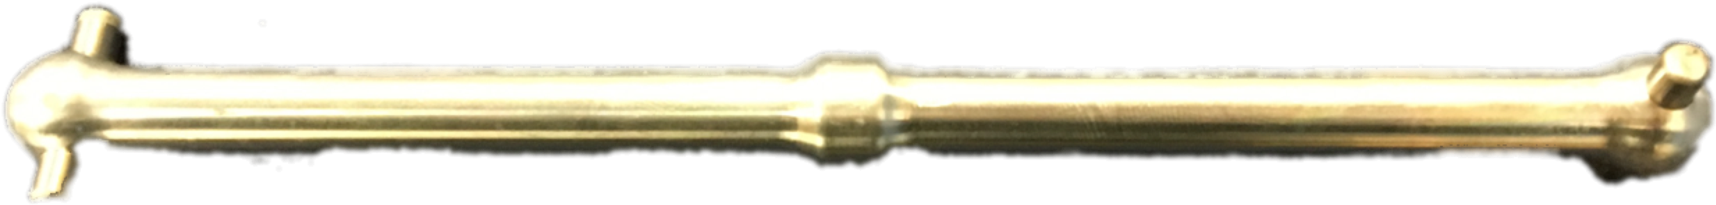 Golden Dog Bone Isolated PNG